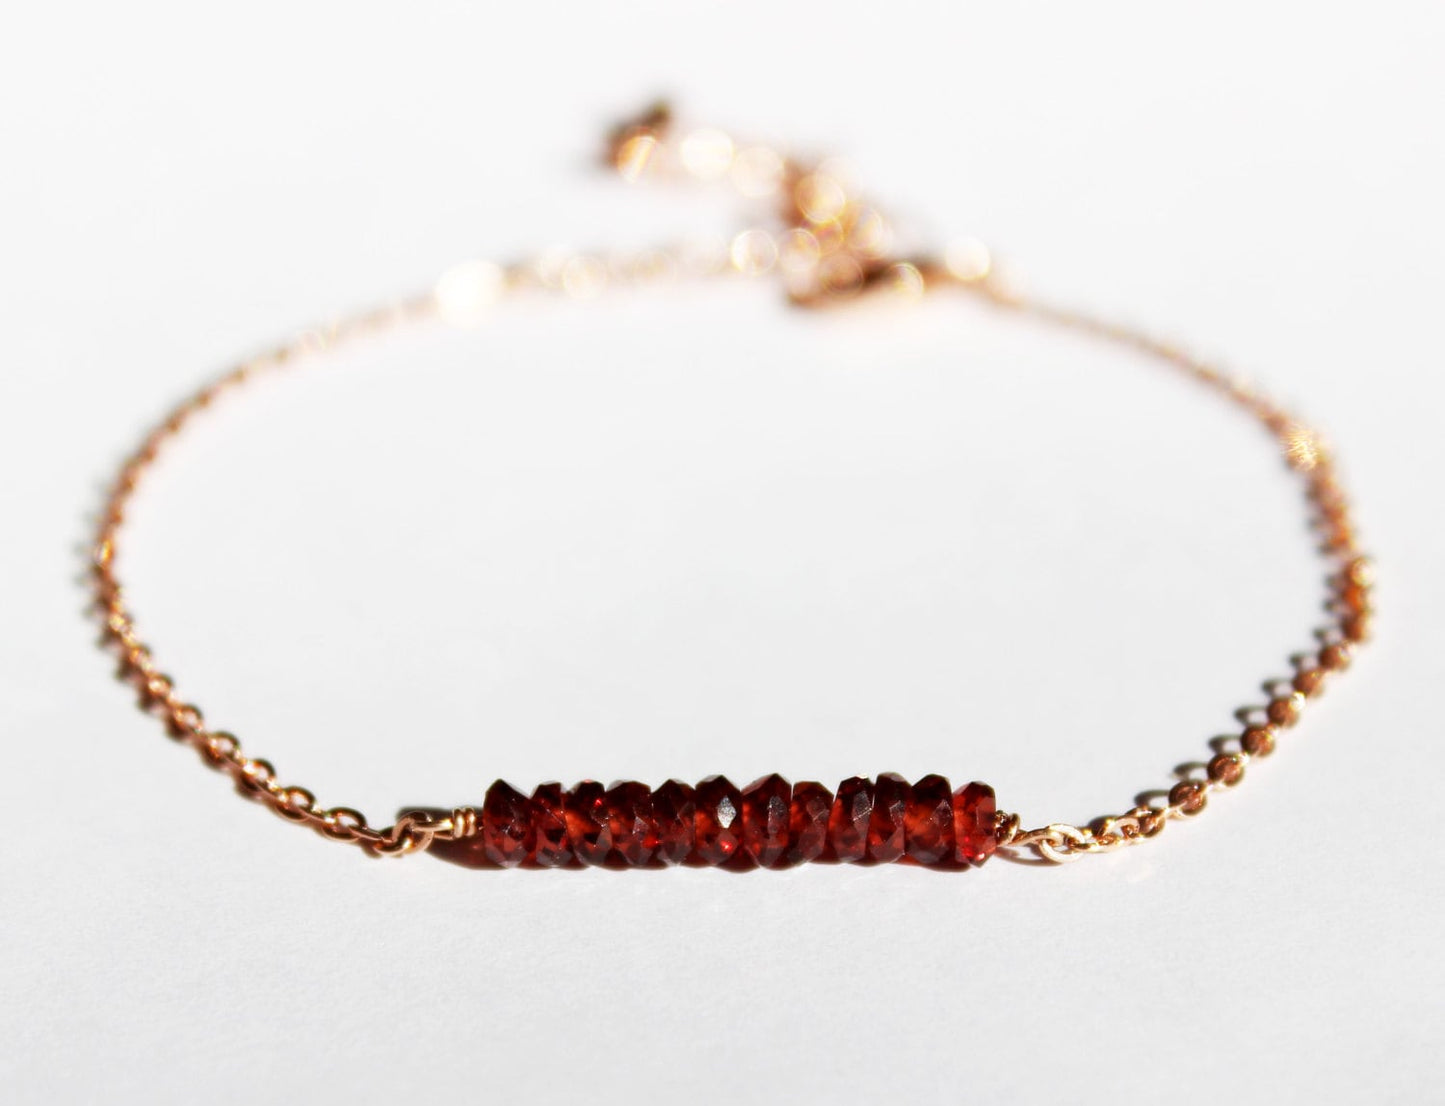 Rose Gold Garnet Beaded Bracelet - Minimalist Jewelry - January Birthstone Bead Bar Bracelet - Rose Gold Jewelry